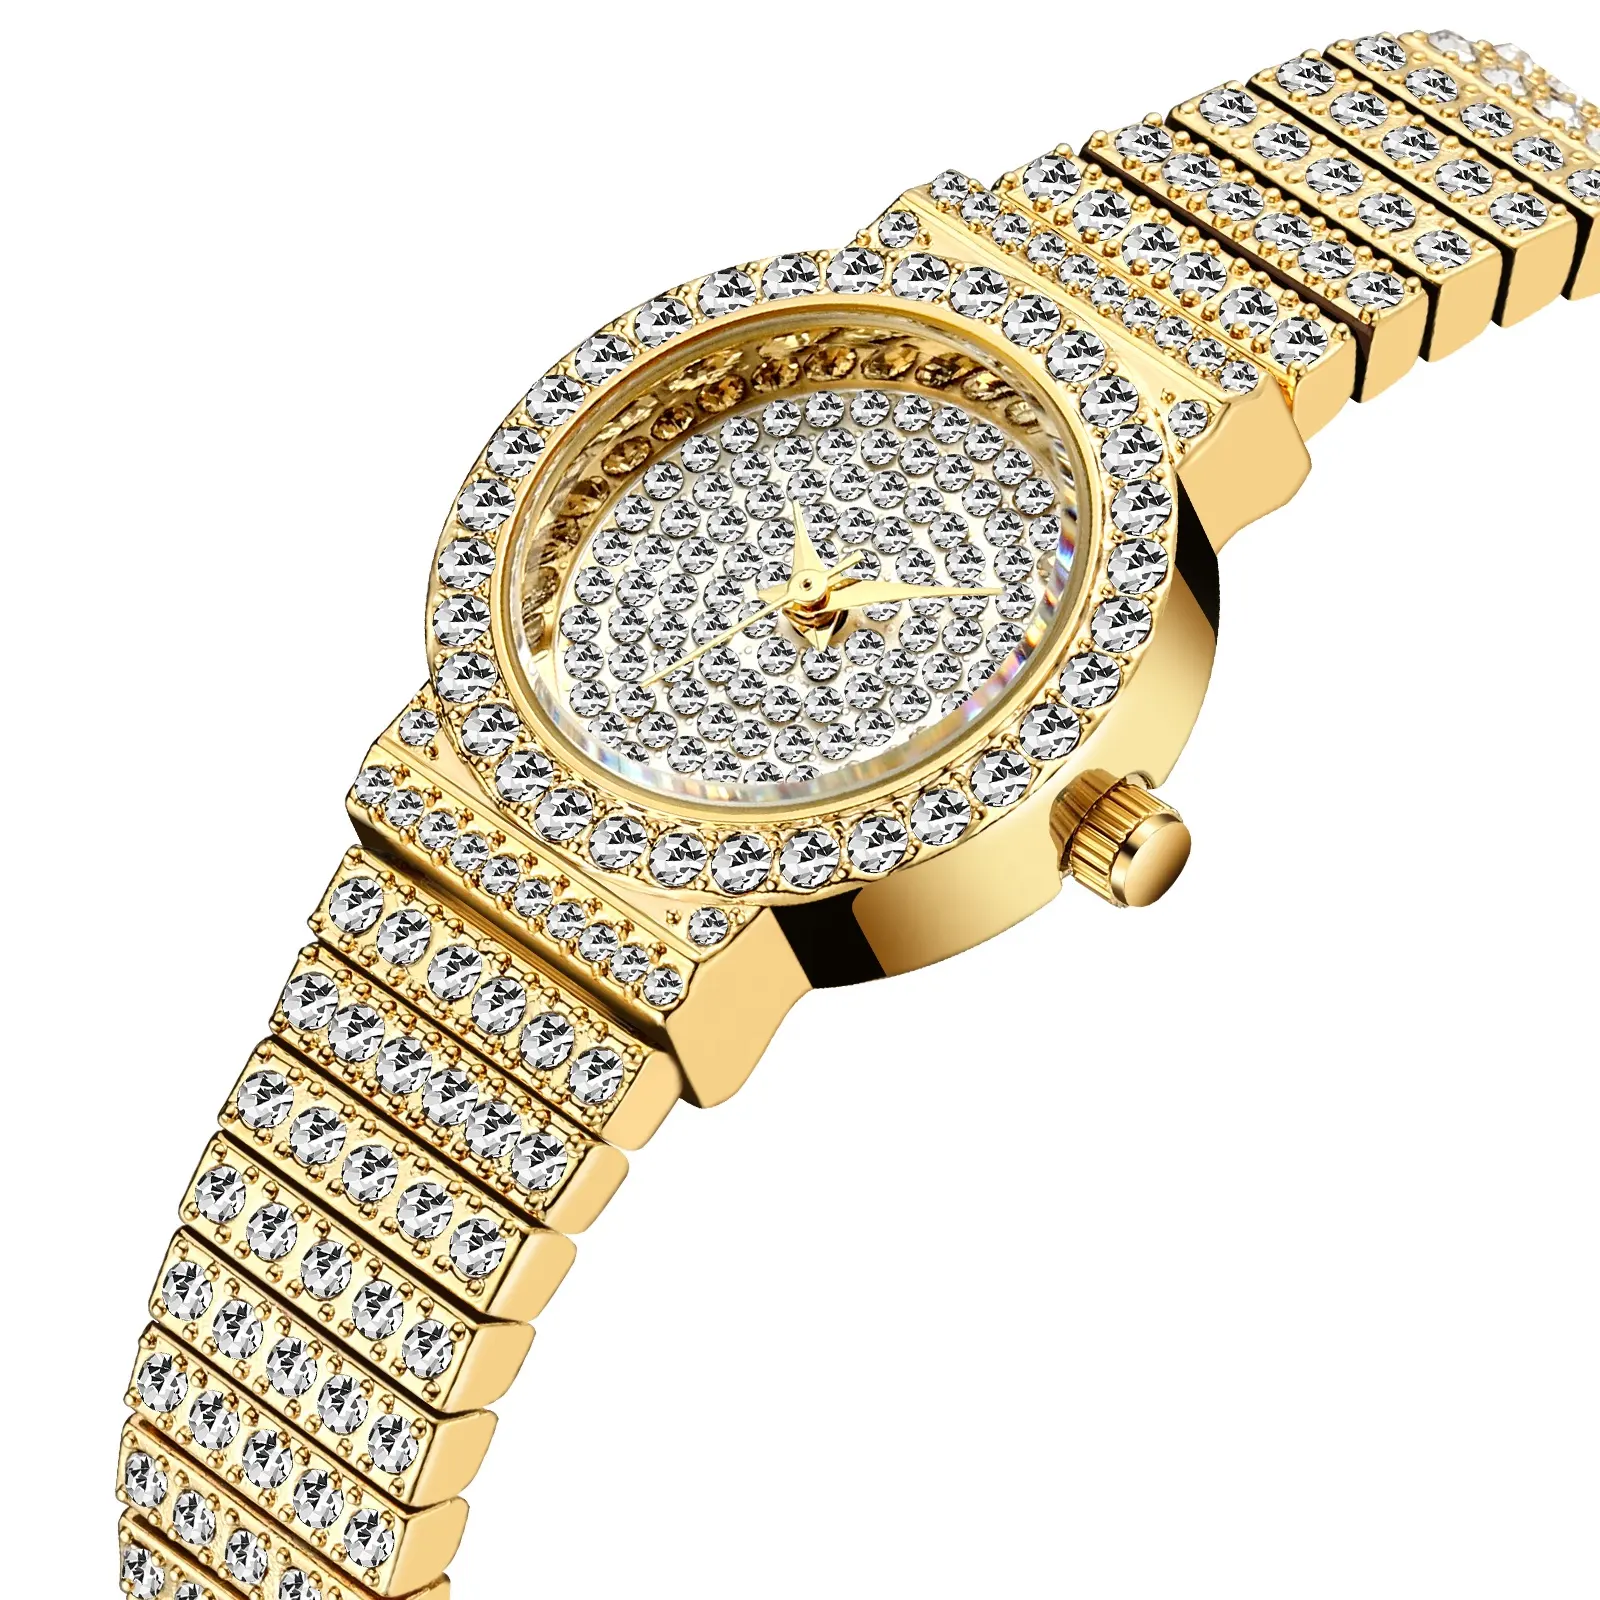 Luxury Brand Watch For Women Stylish Waterproof Golf Dress Women Watch With Crystals Trend 2021 Female Clock Gifts Bling Jewelry